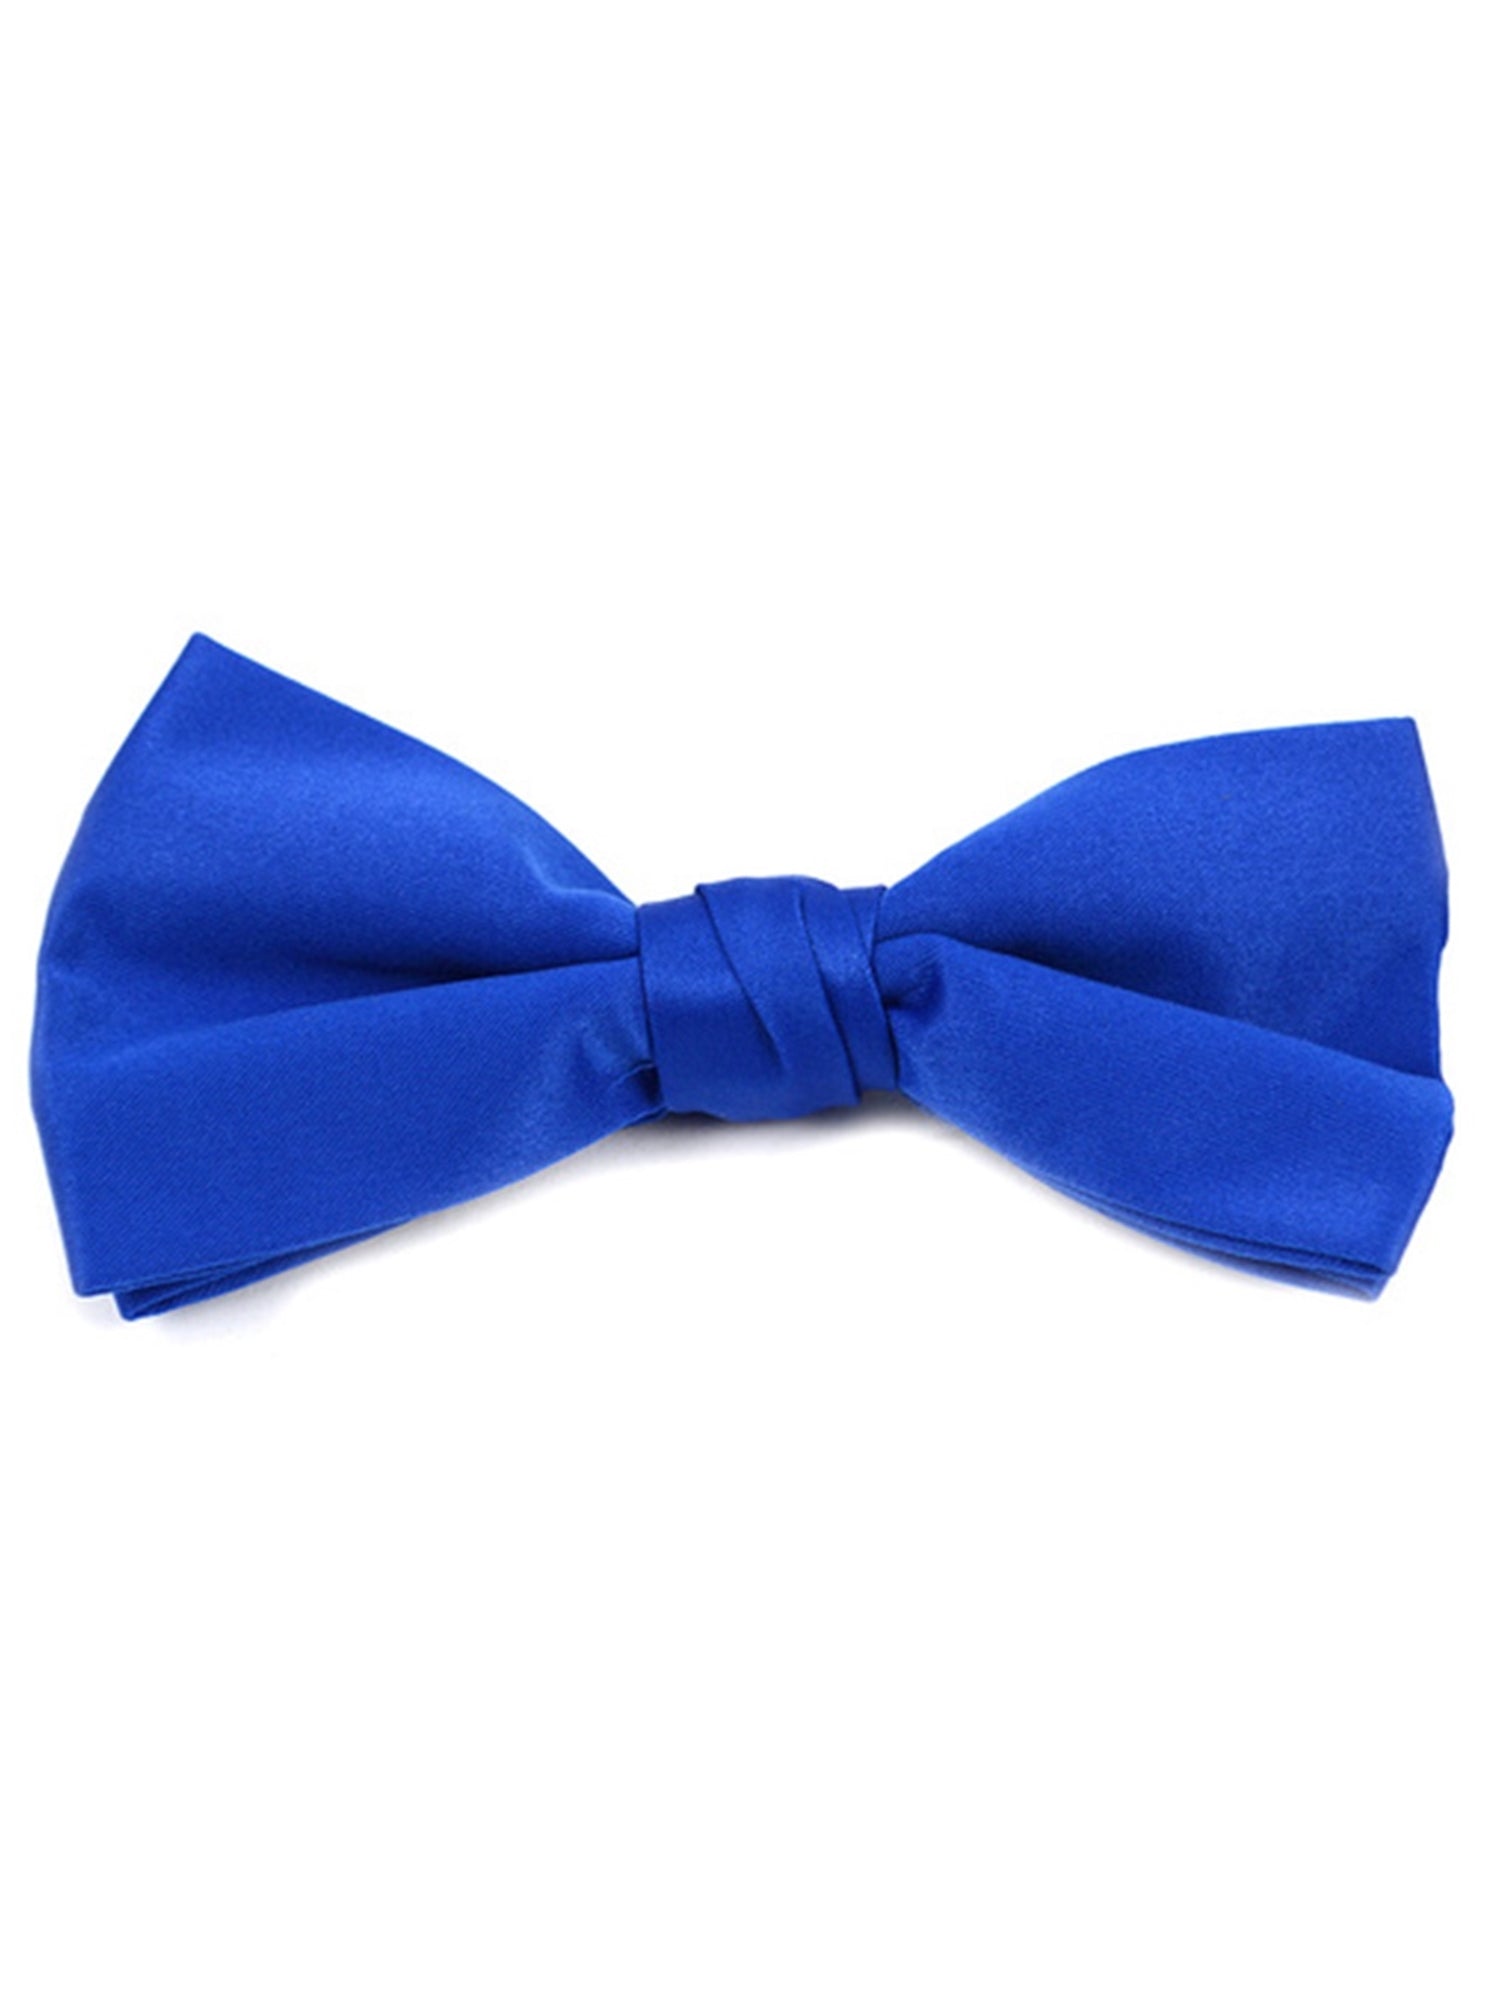 Men's Pre-tied Adjustable Length Bow Tie - Formal Tuxedo Solid Color Men's Solid Color Bow Tie TheDapperTie Royal Blue One Size 